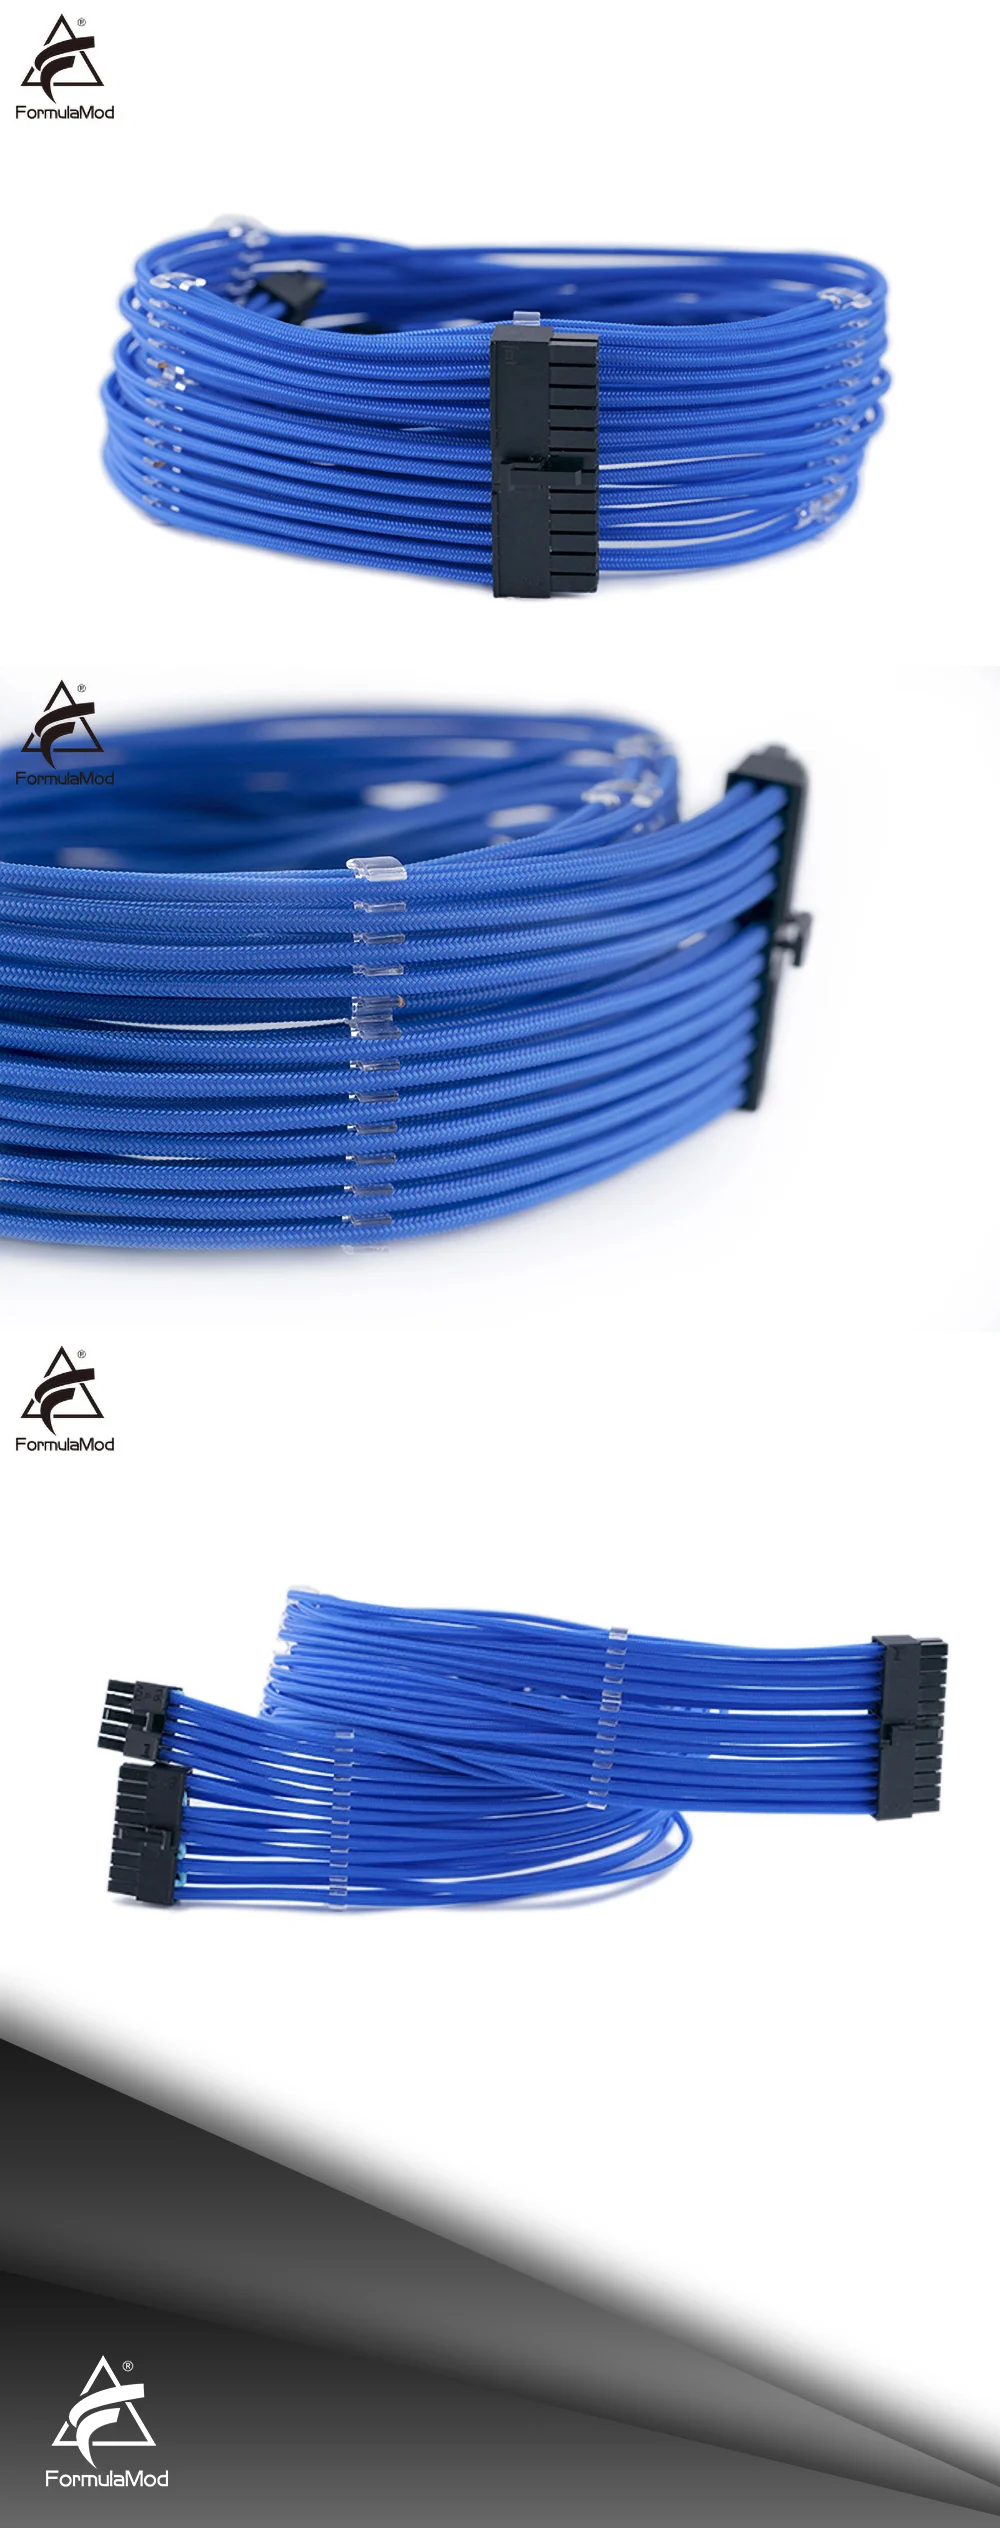 FormulaMod ASUS/Seasonic/Antec Fully Modular PSU Cable Kit, 18AWG Sleeved, Kit For ASUS/Seasonic/Antec Modular PSU, Fm-BZXZ [Please check compatibility]  